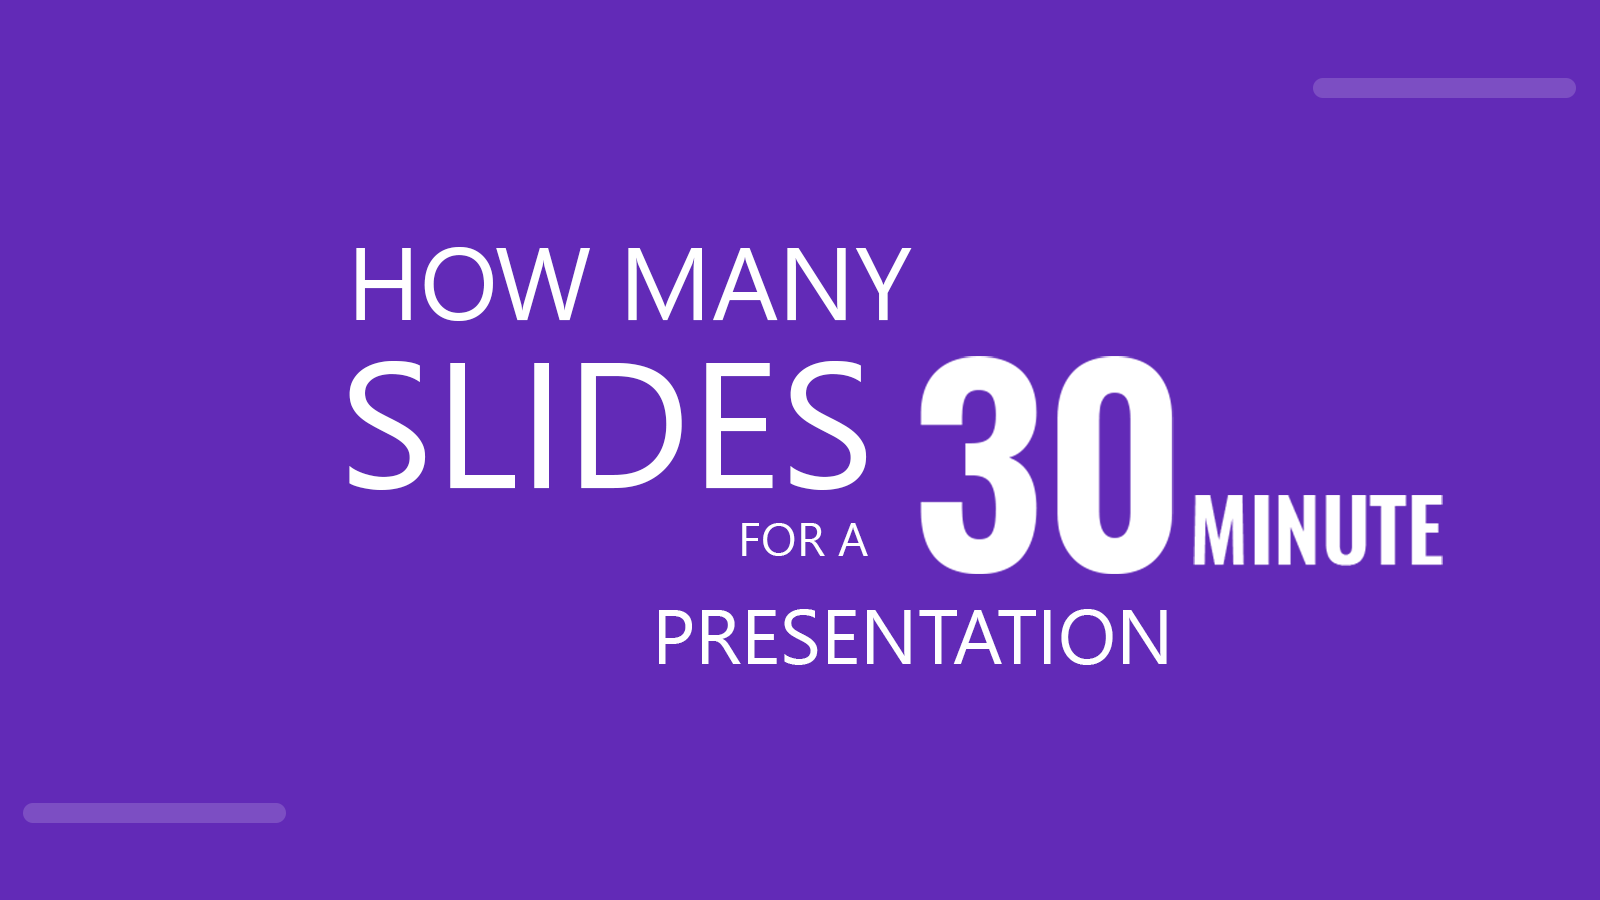 how to make a 30 minute presentation